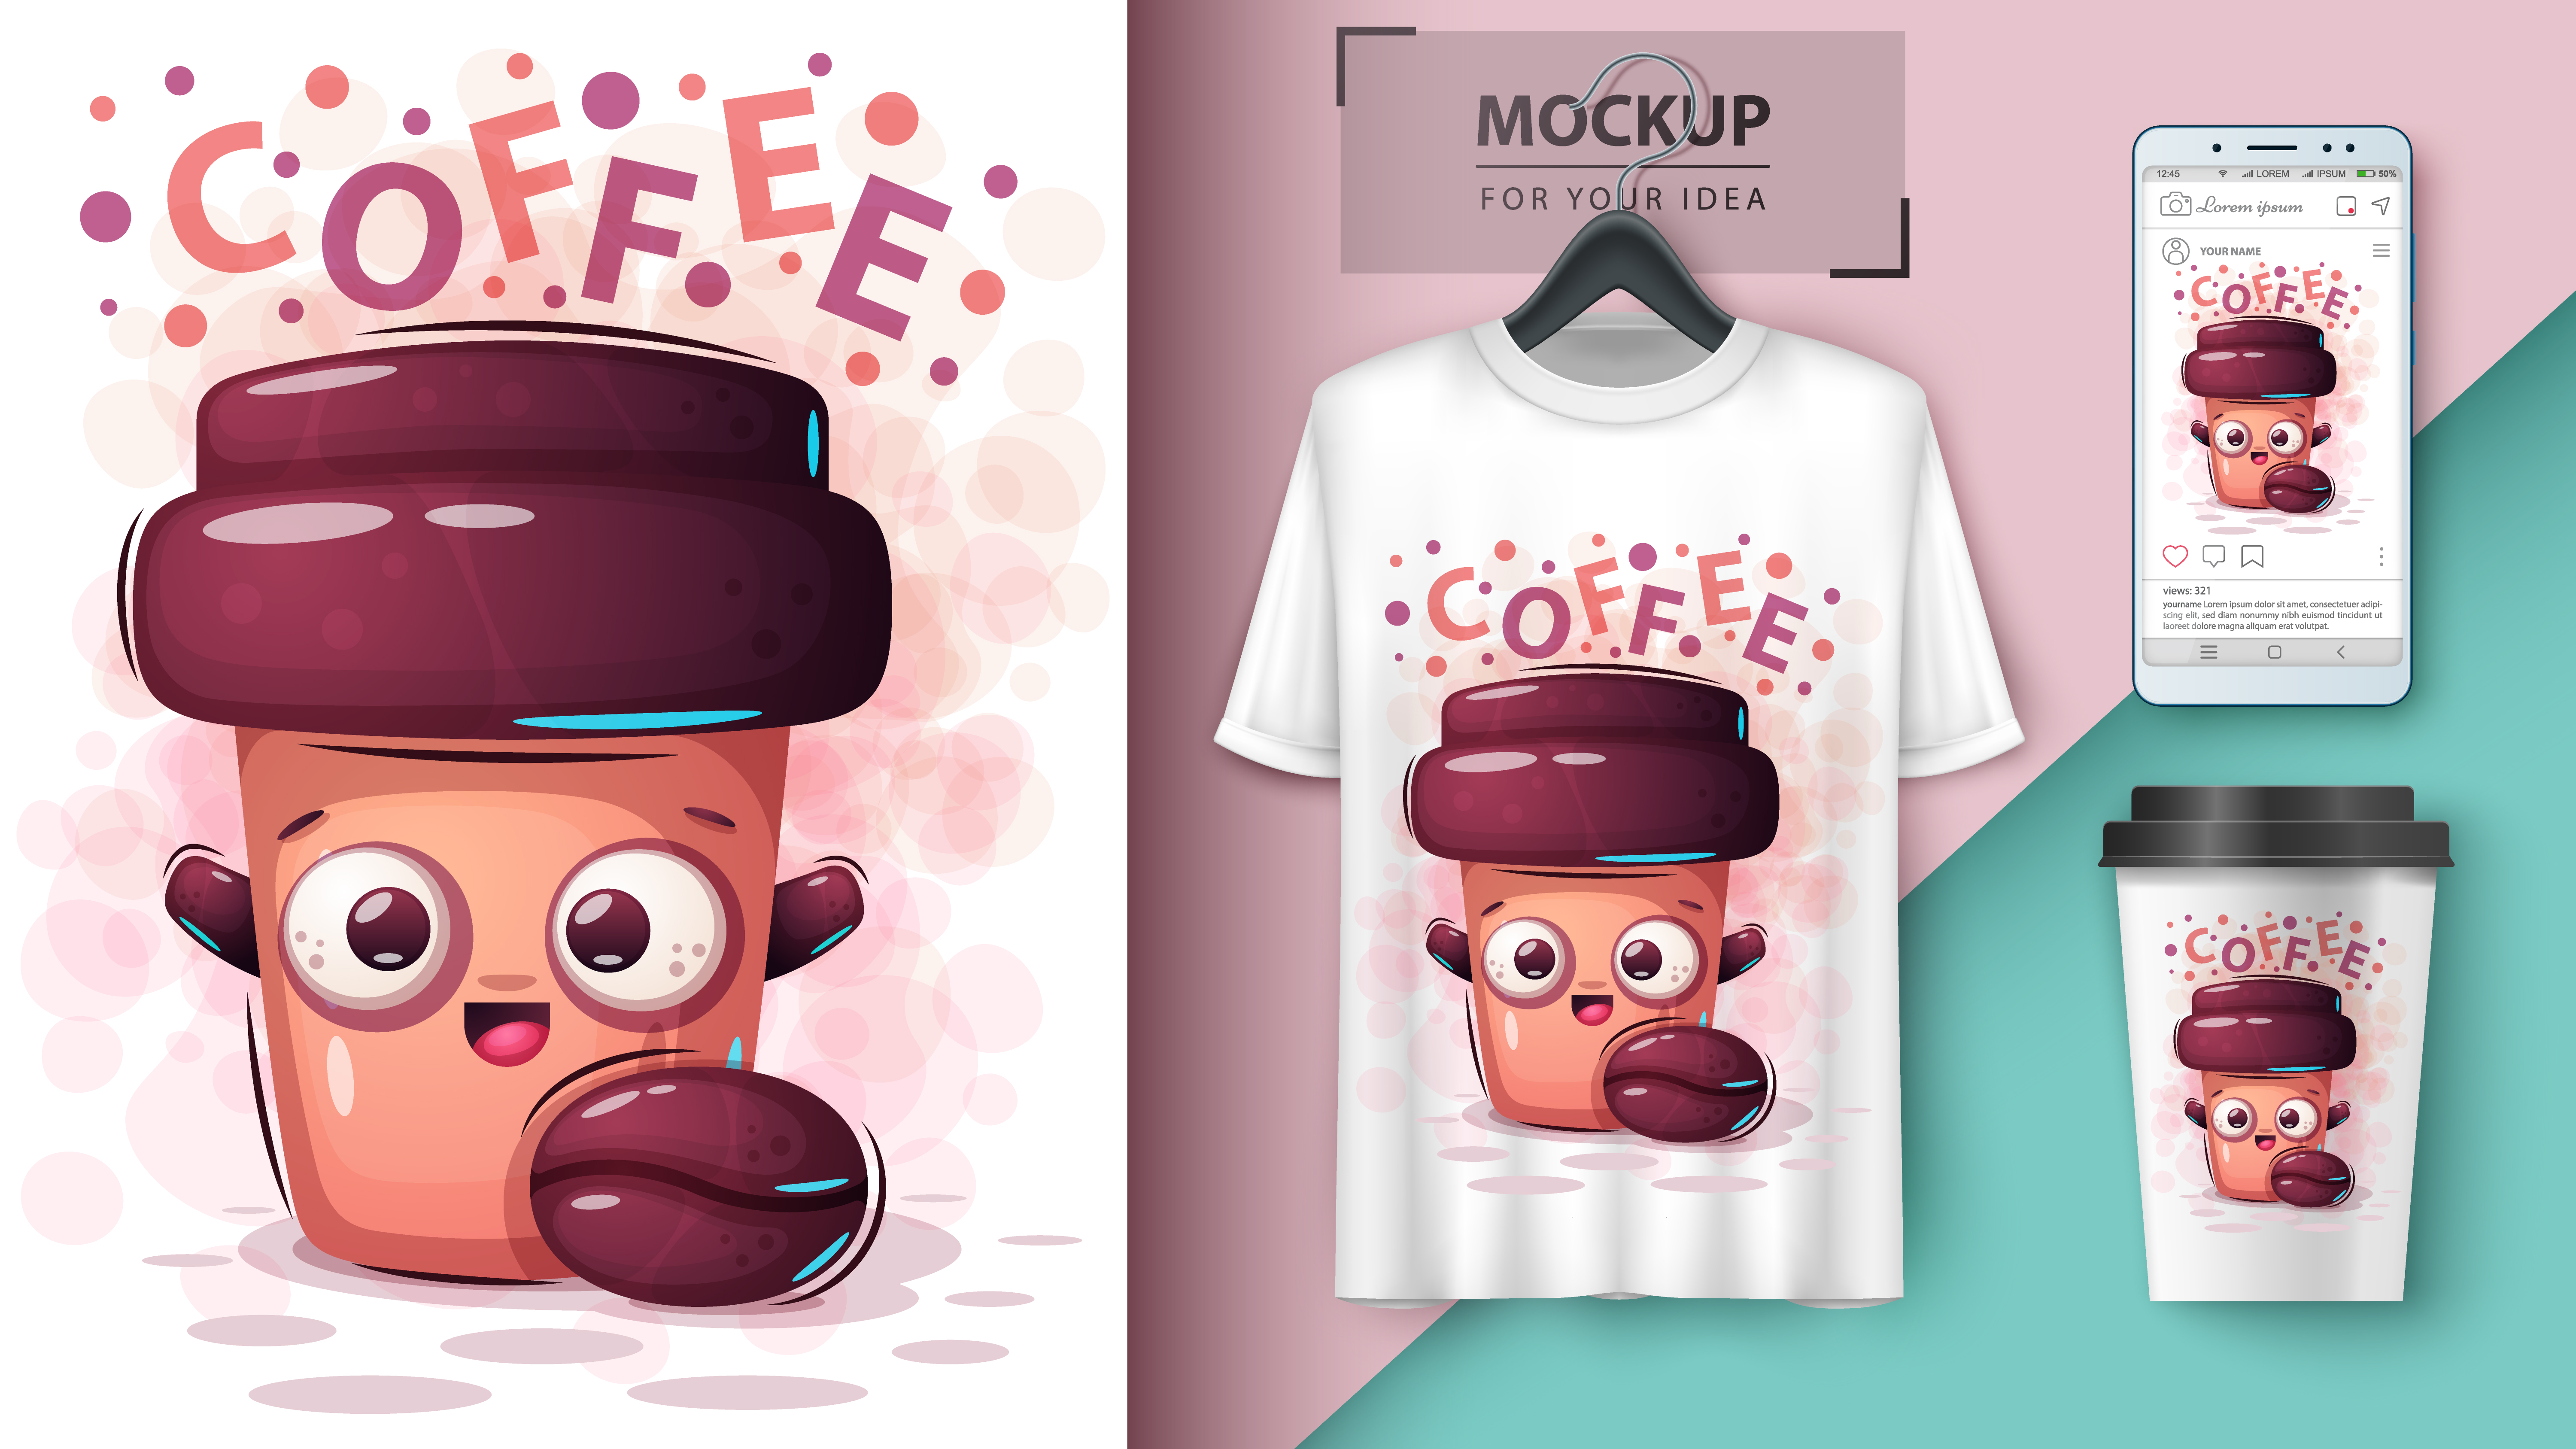 Download Cartoon Coffee Cup Design - Download Free Vectors, Clipart Graphics & Vector Art